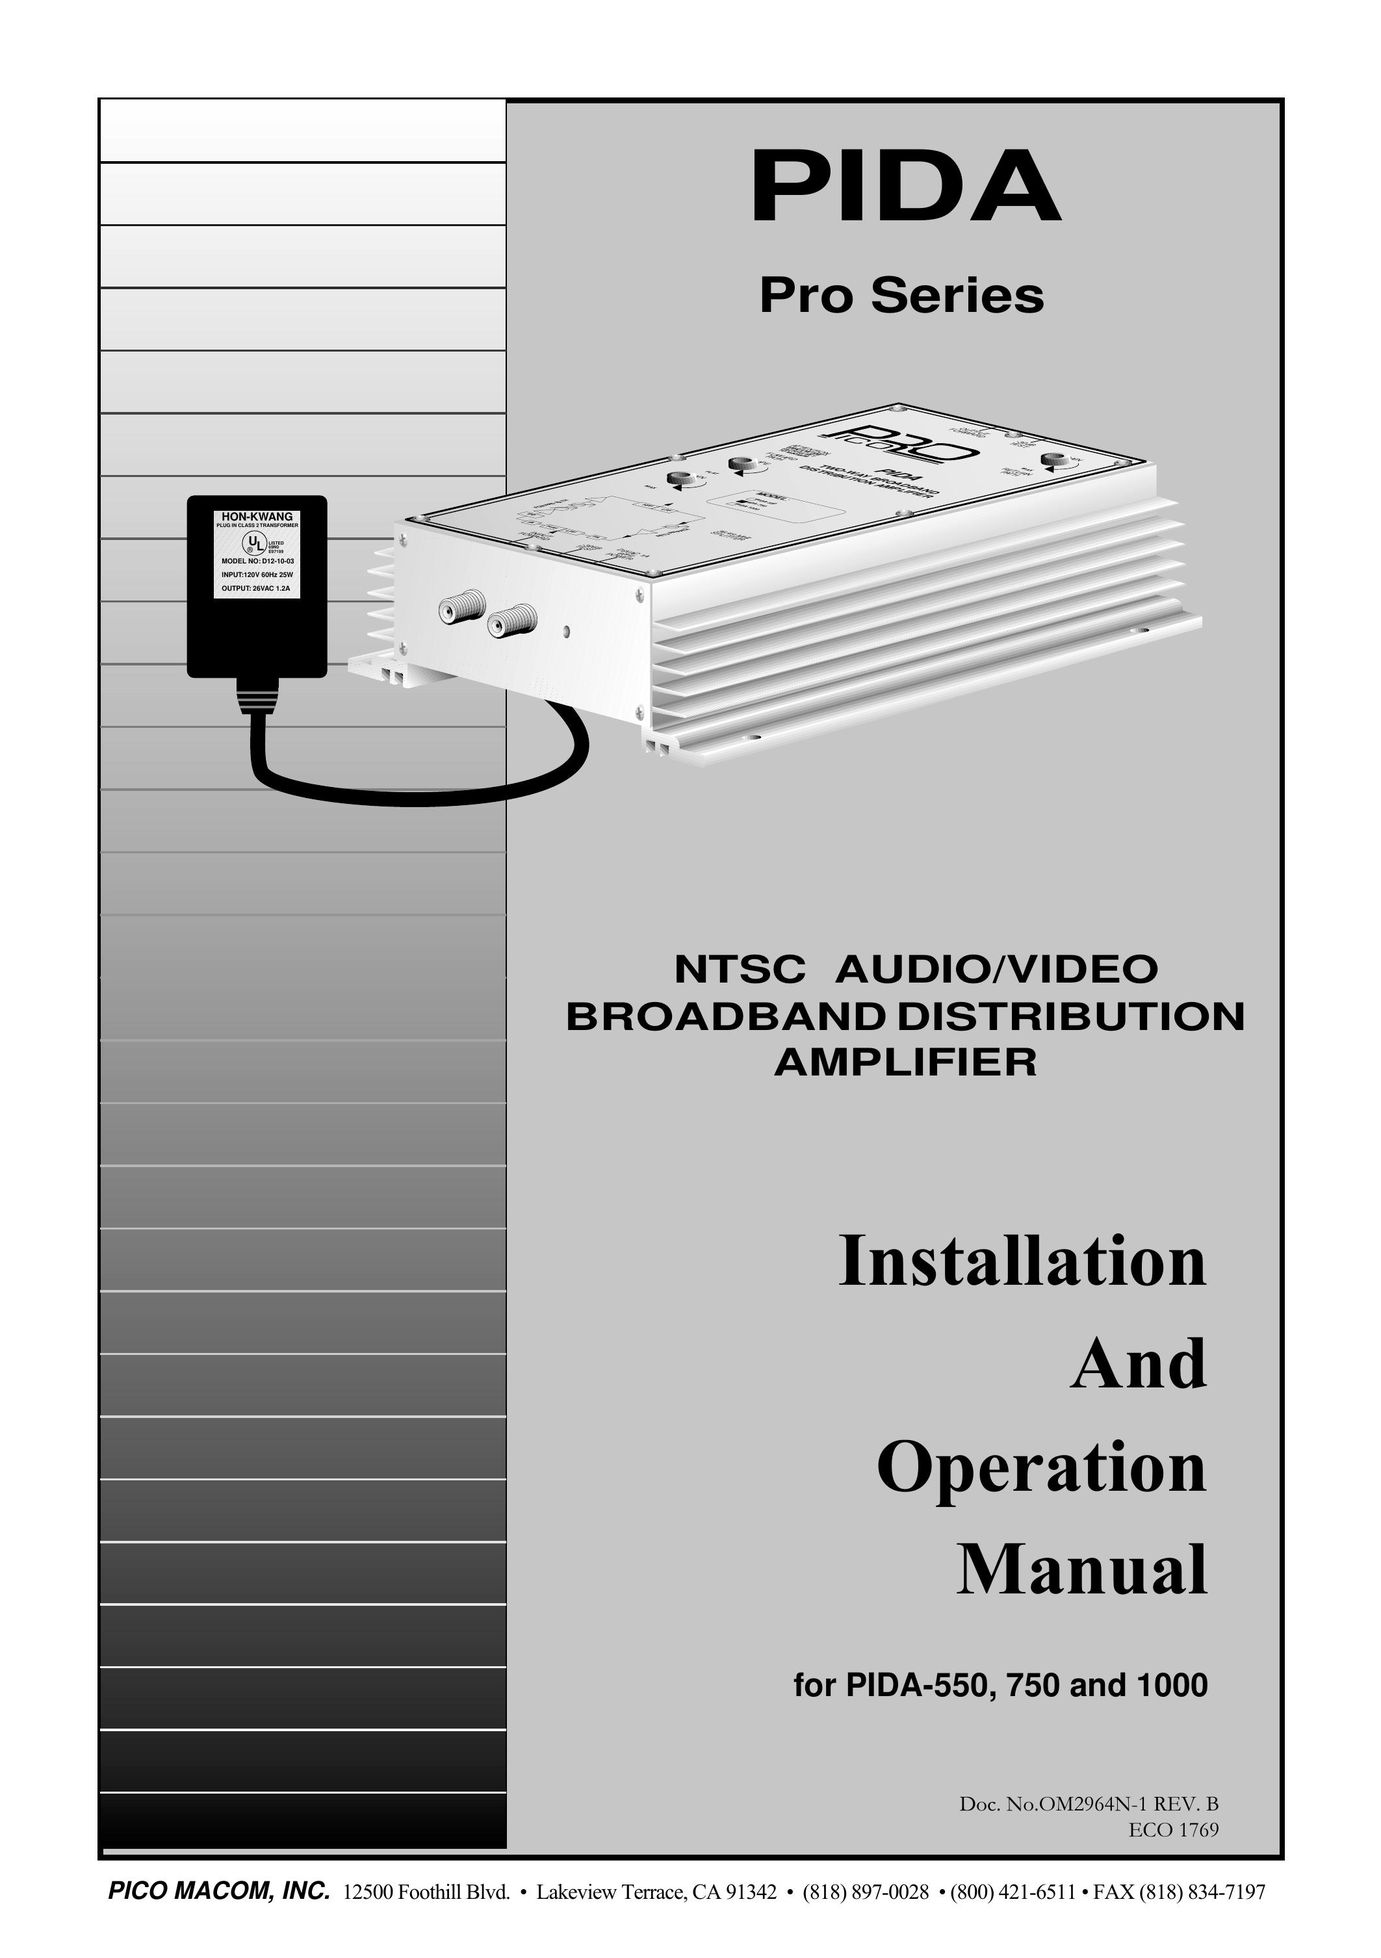 Pico Macom PIDA-1000 Stereo Amplifier User Manual